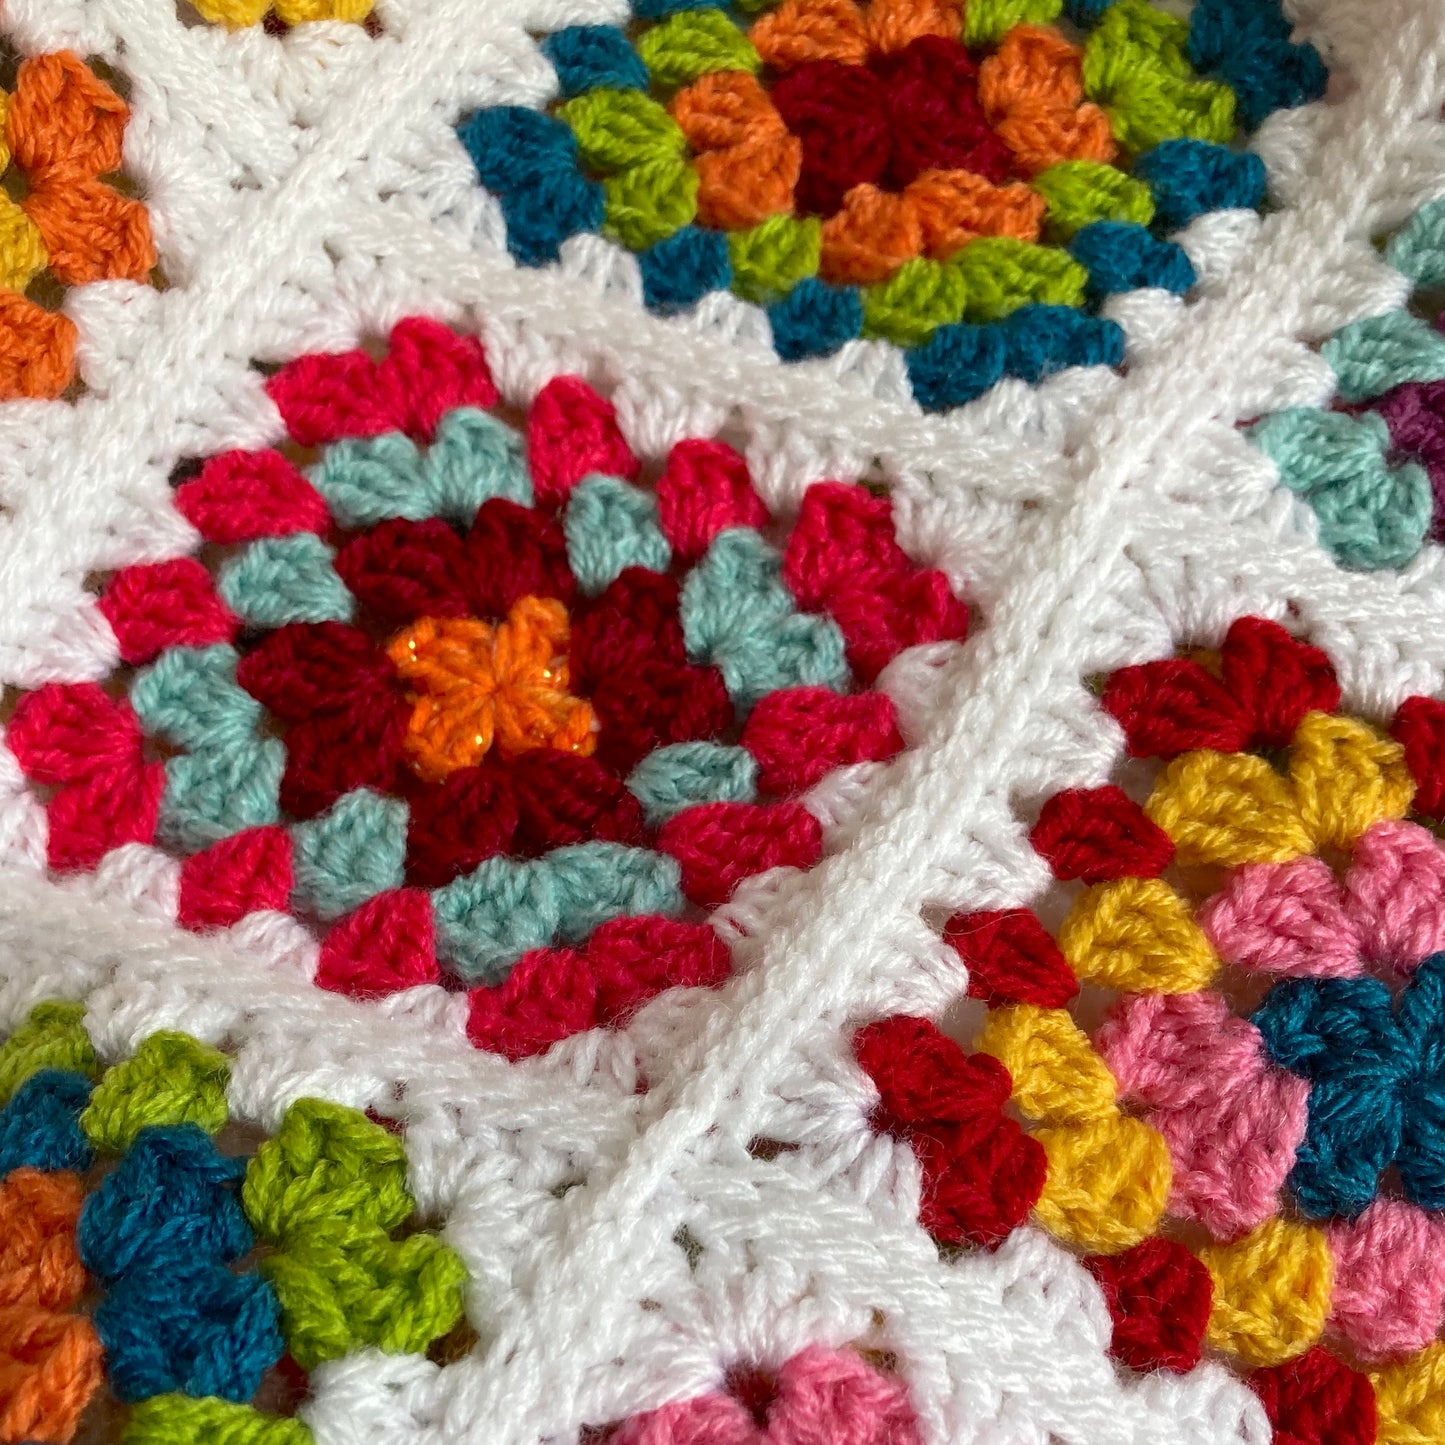 Granny Square Crochet Waistcoat - White Rainbow